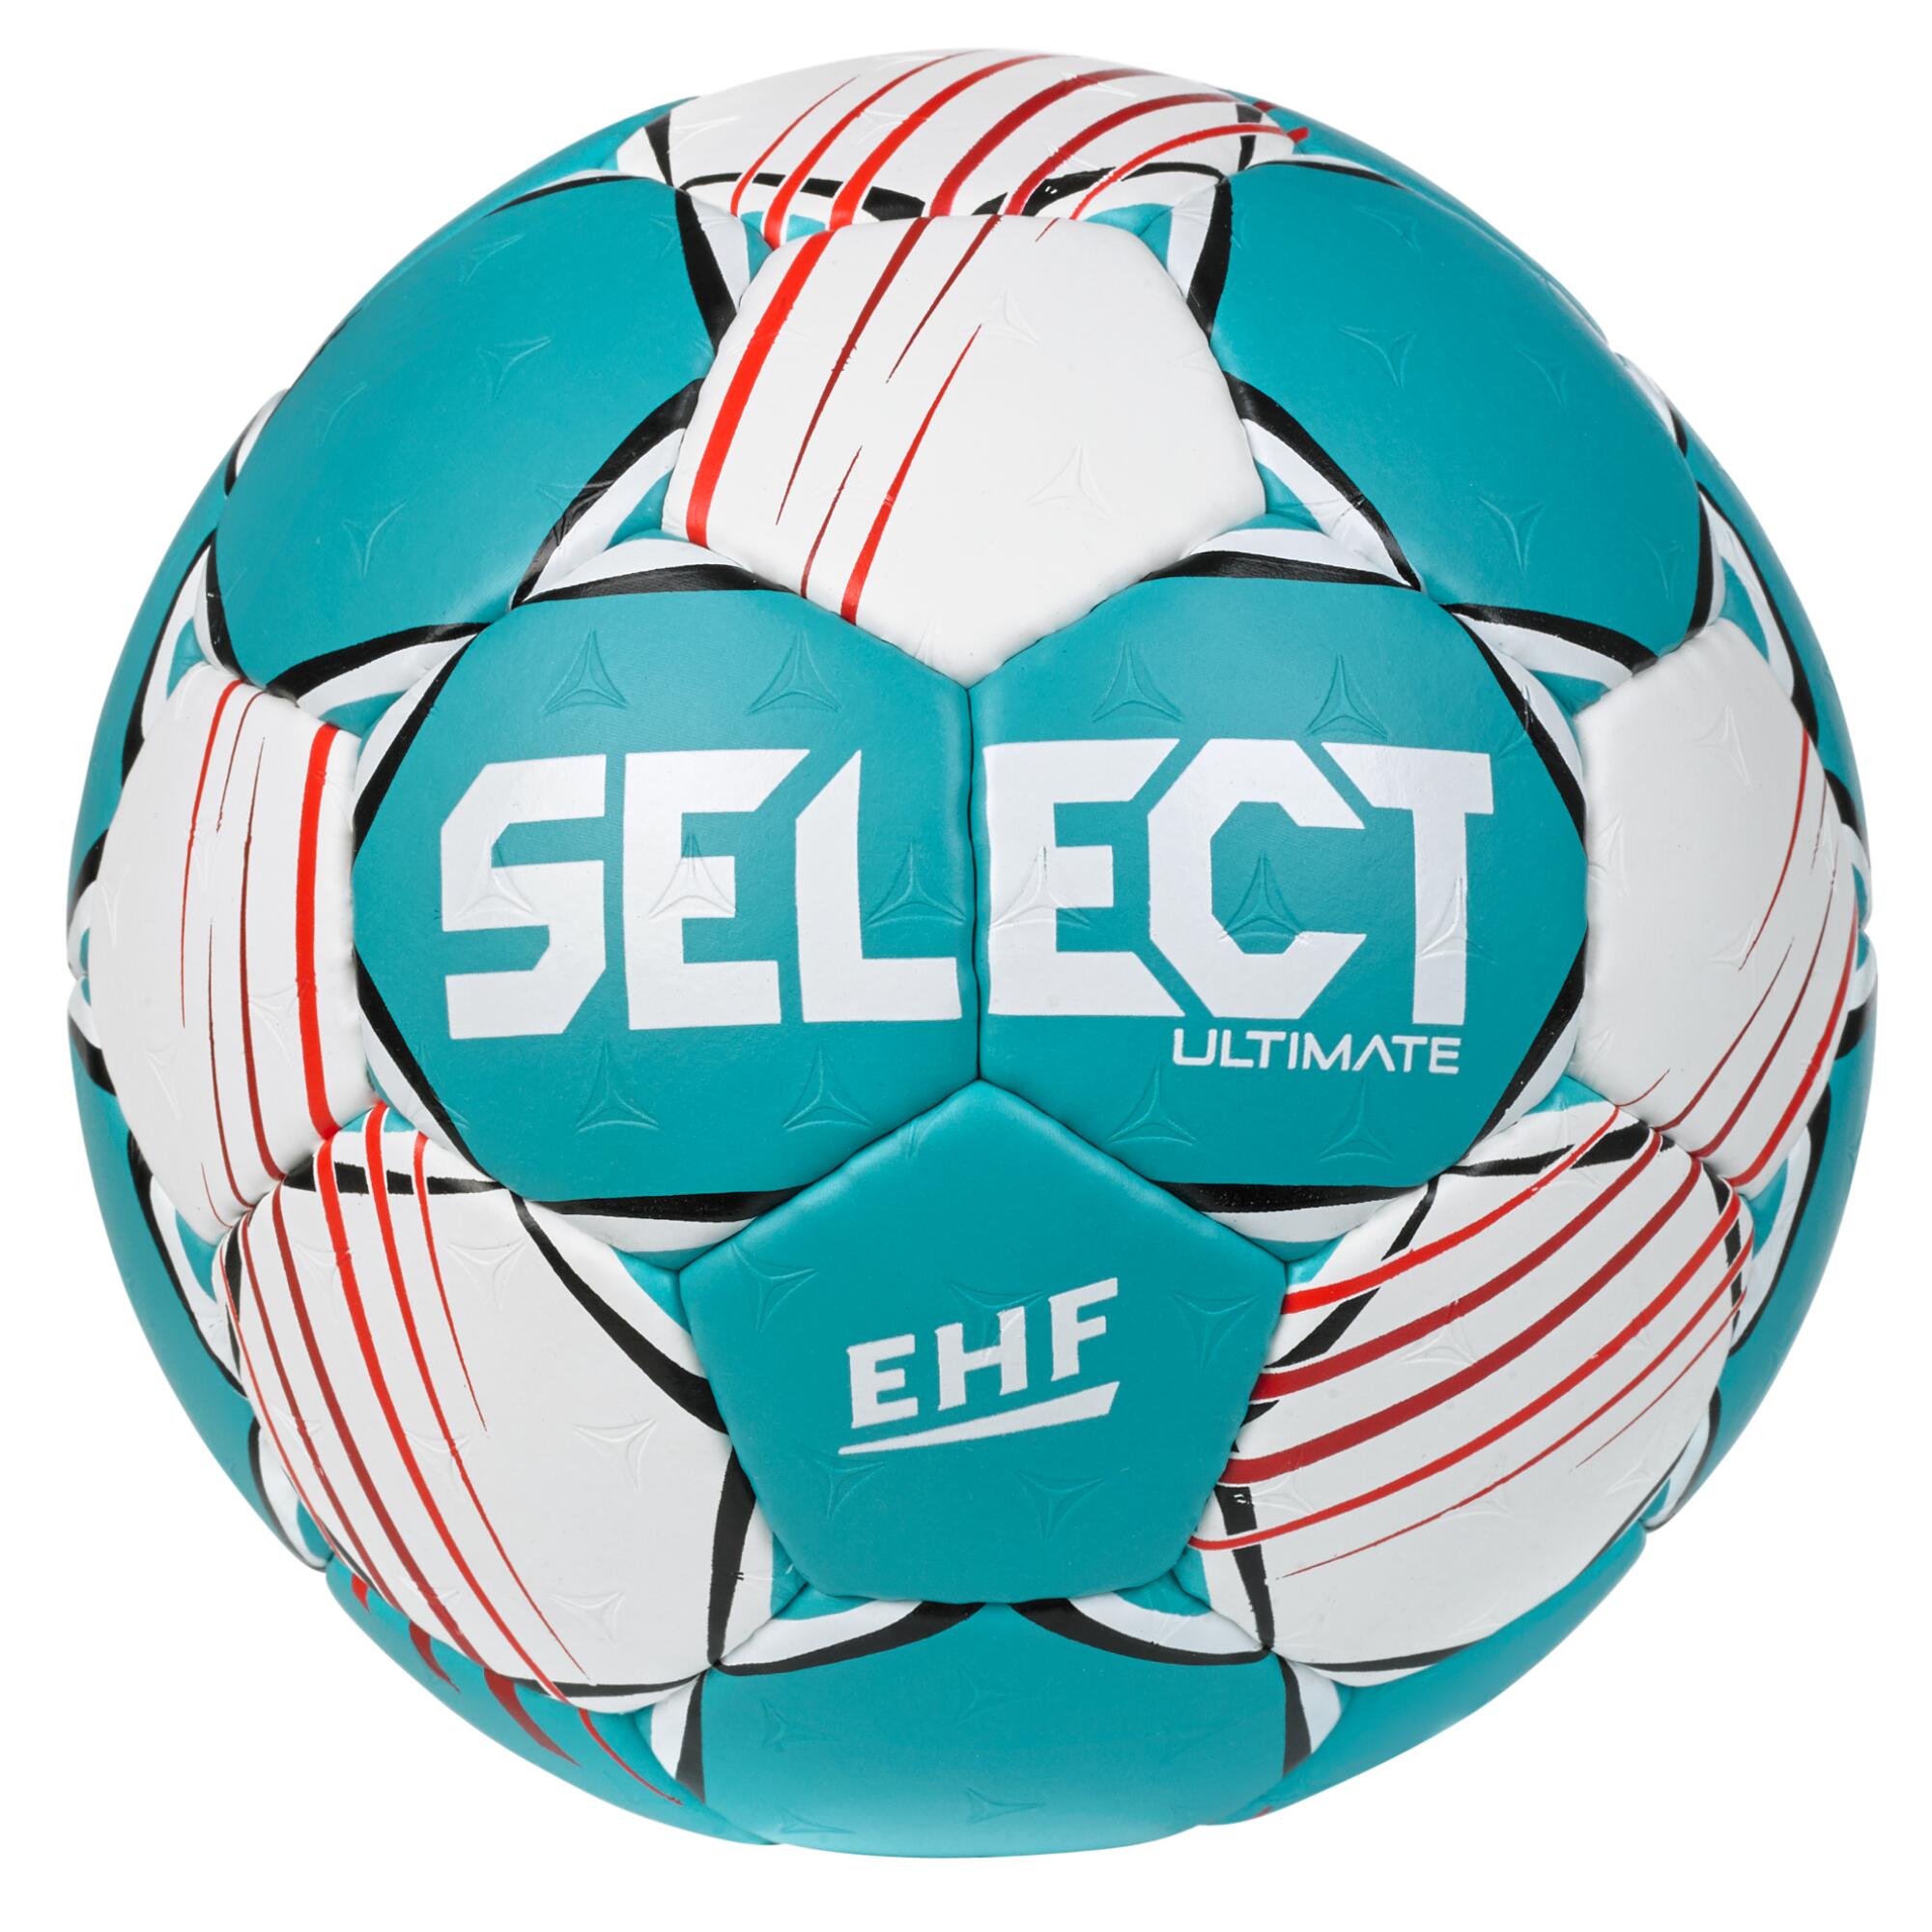 Handboll Select Ultimate 22 Storlek 2